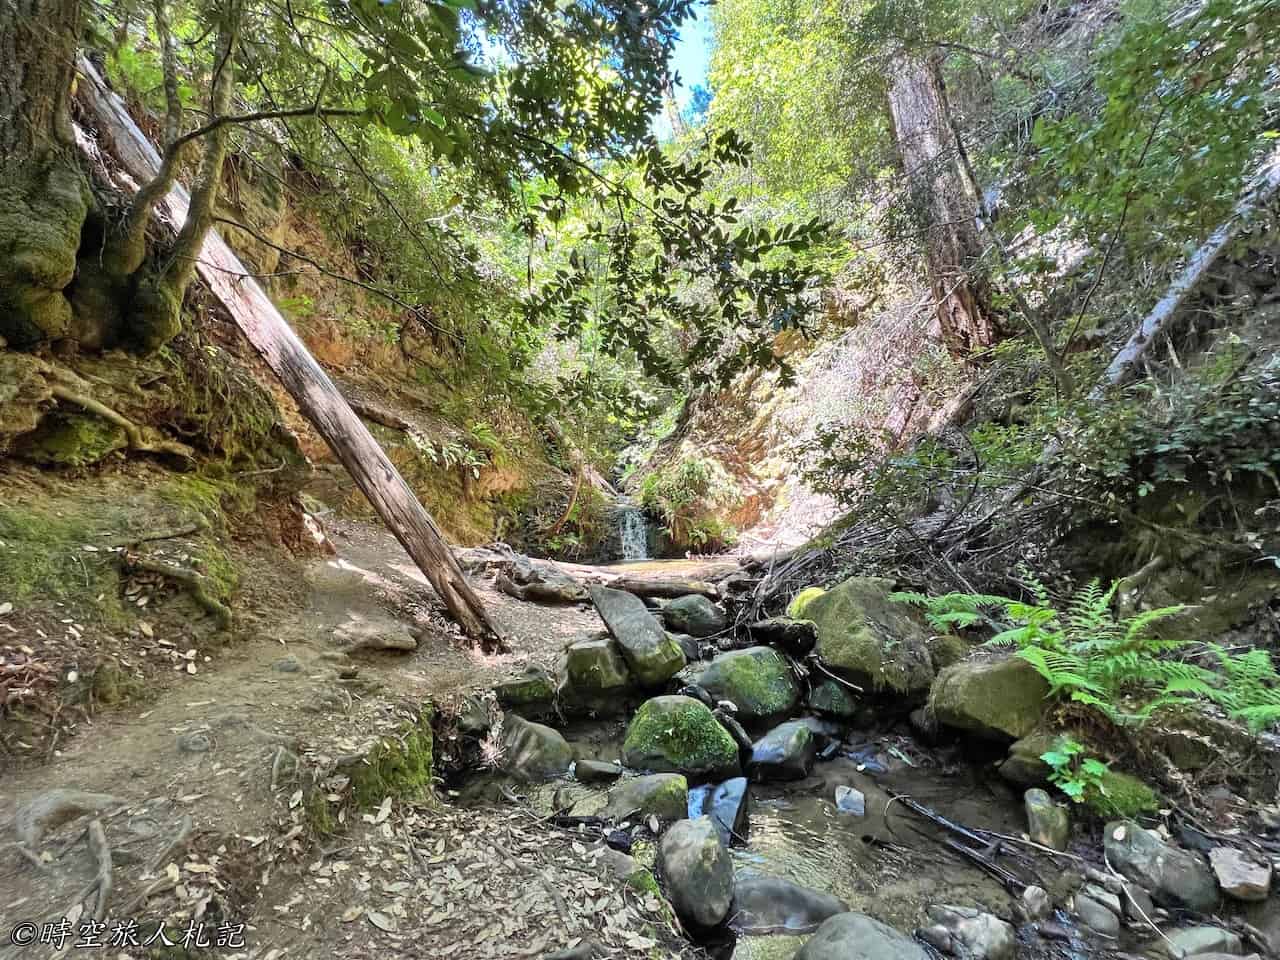 Portola redwood state park,Portola redwood camping,Tiptoe falls 37